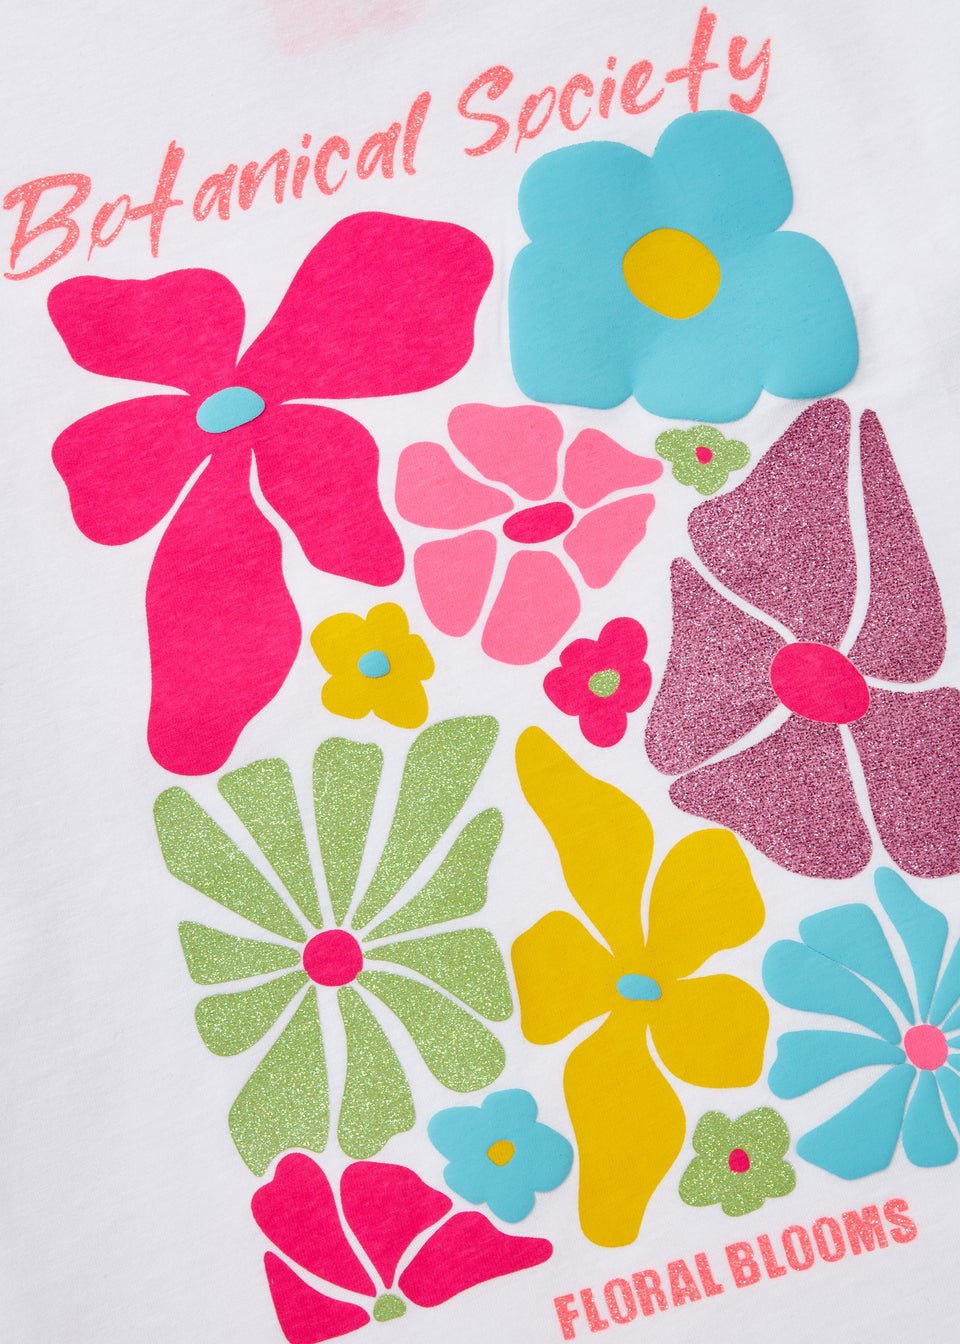 Girls White "Botanical Society" Slogan Flower T-Shirt (7-13yrs)